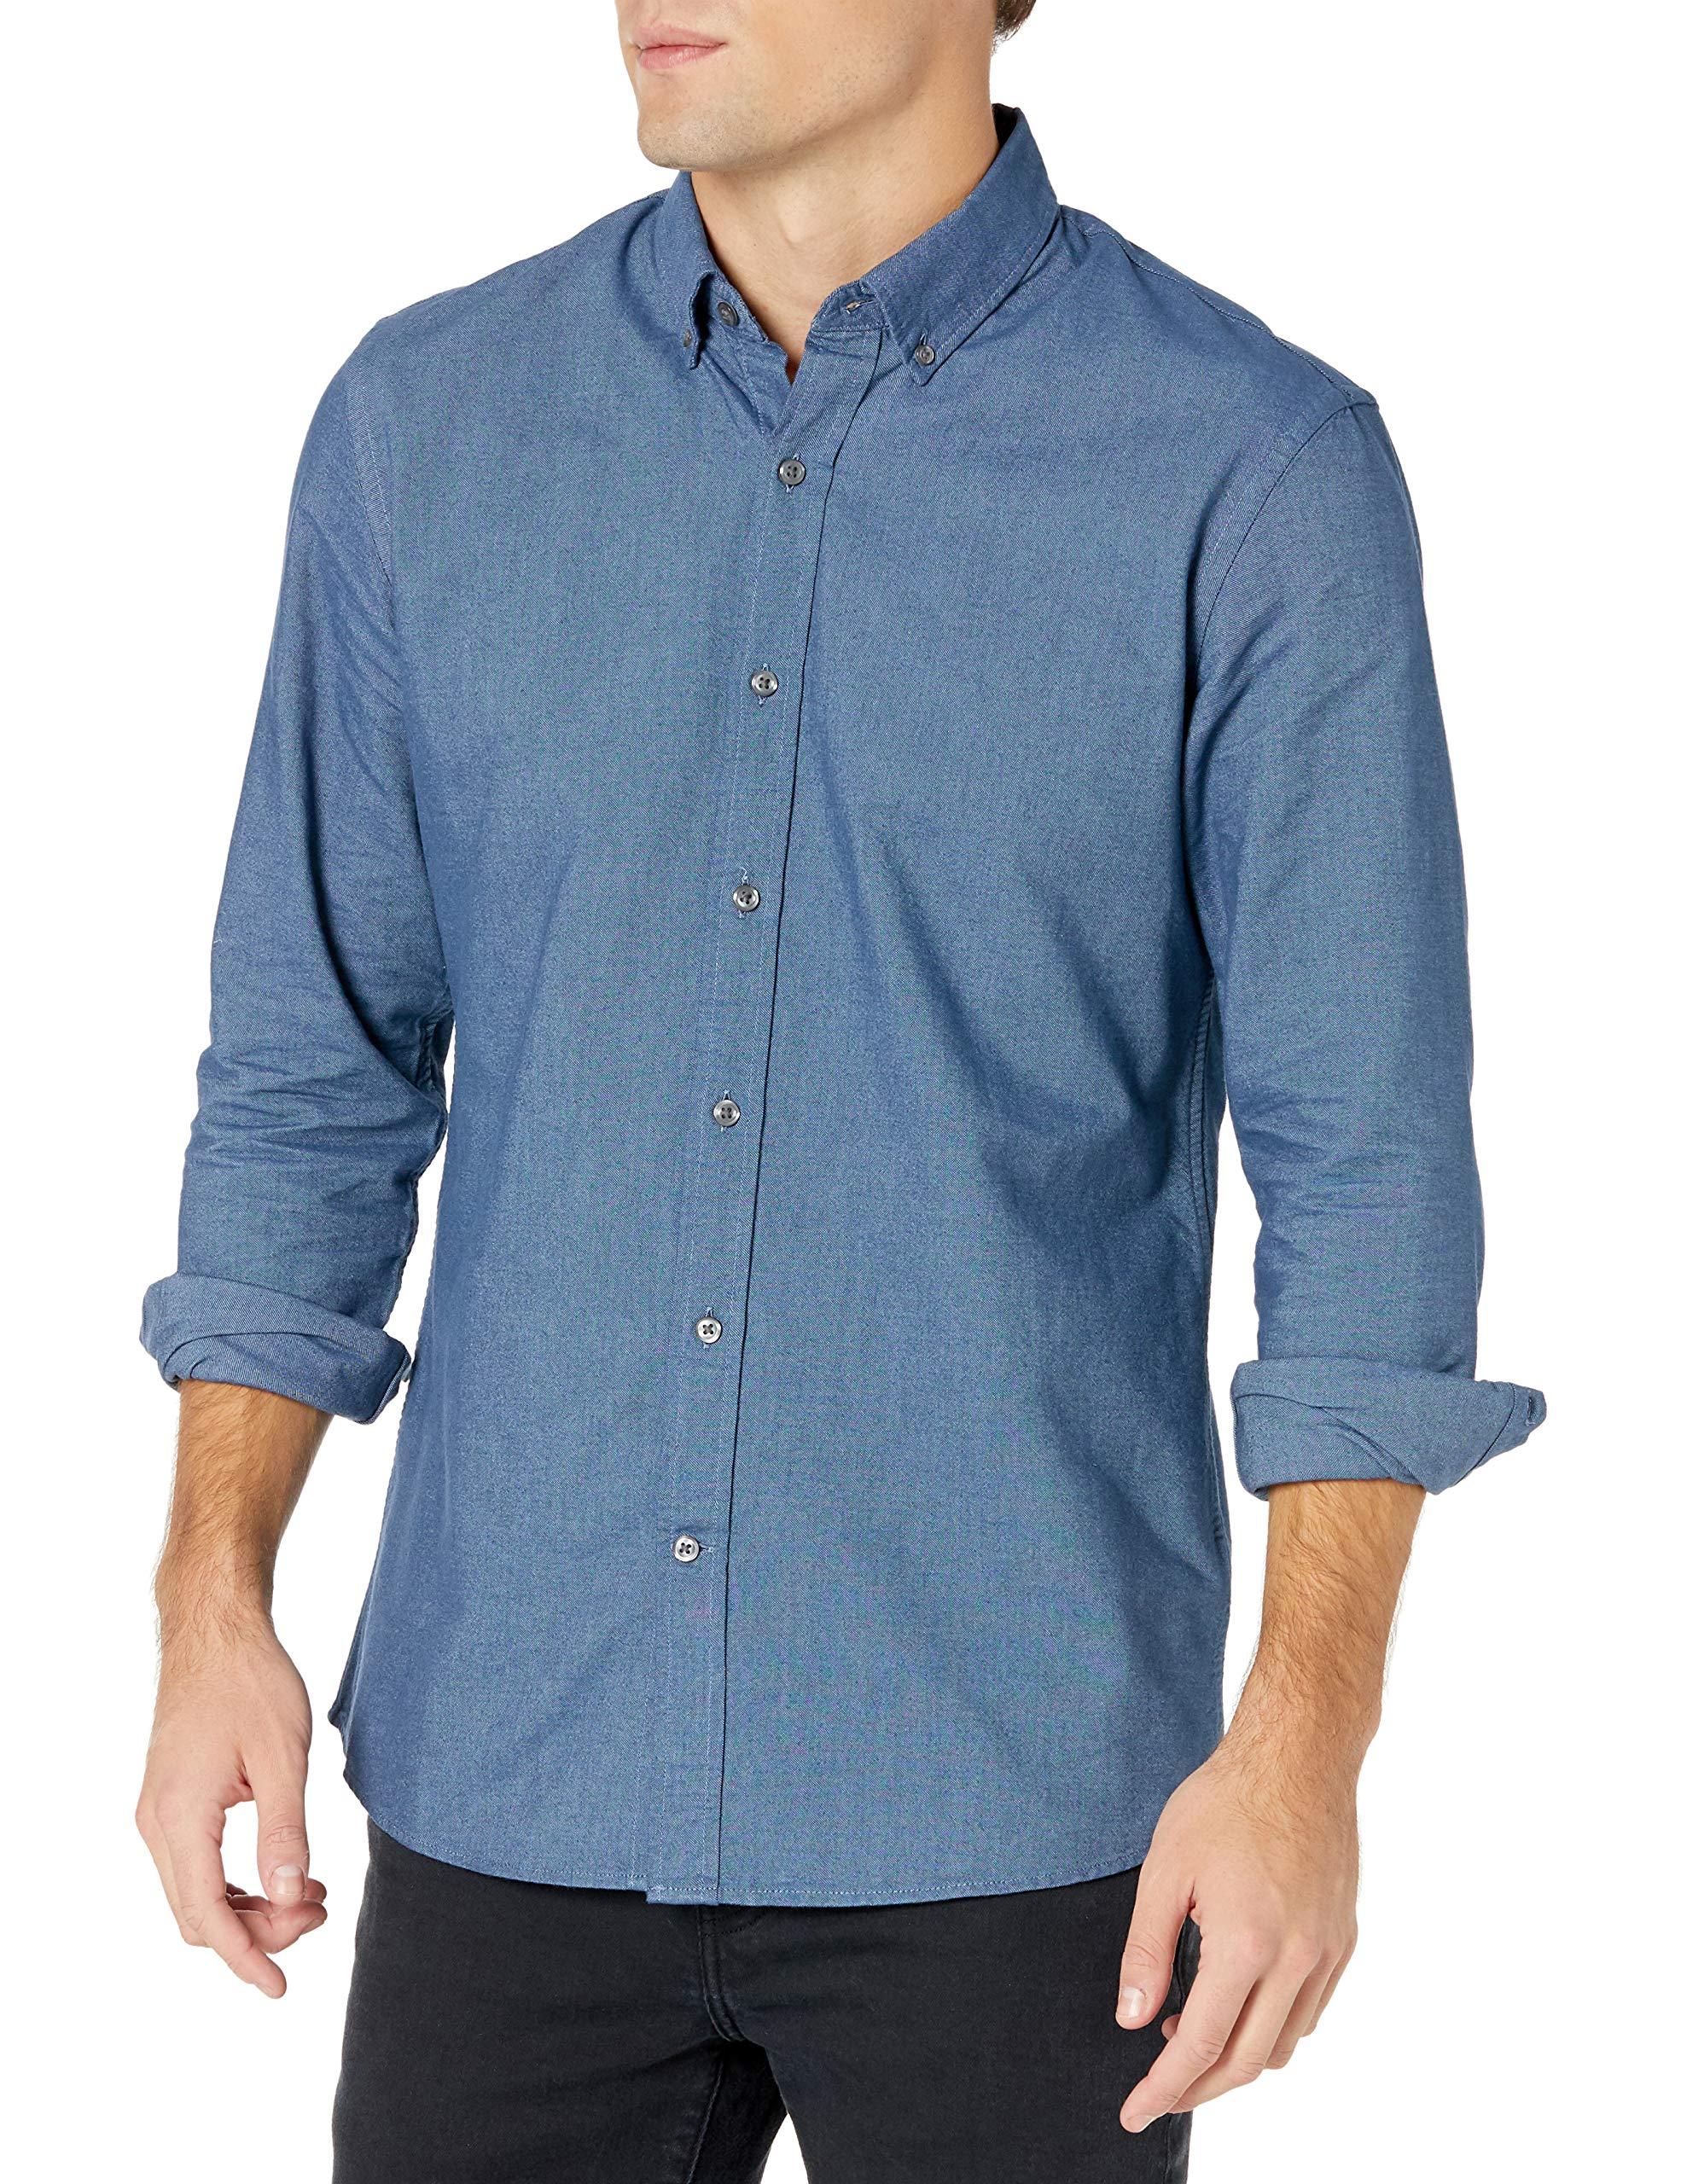 Brand Goodthreads Mens Standard-fit Long-Sleeve Fashion Stripe Oxford Shirt